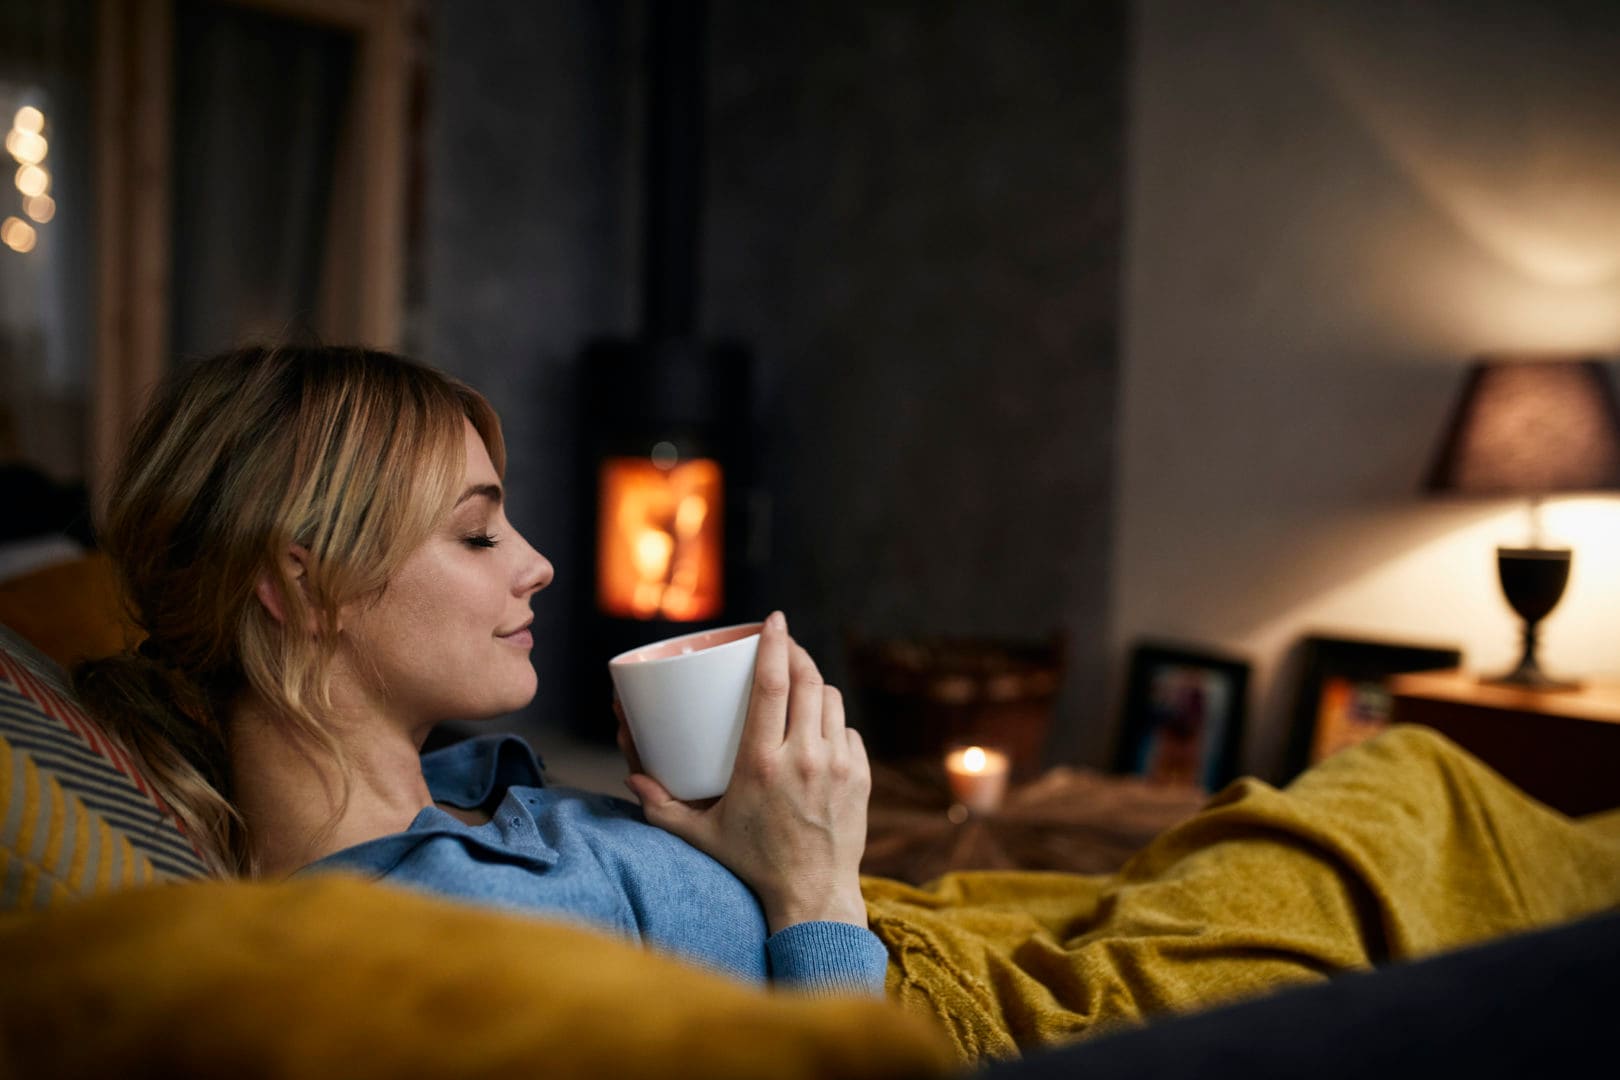 5 tips to managing caregiver holiday stress for a calmer, more joyful season